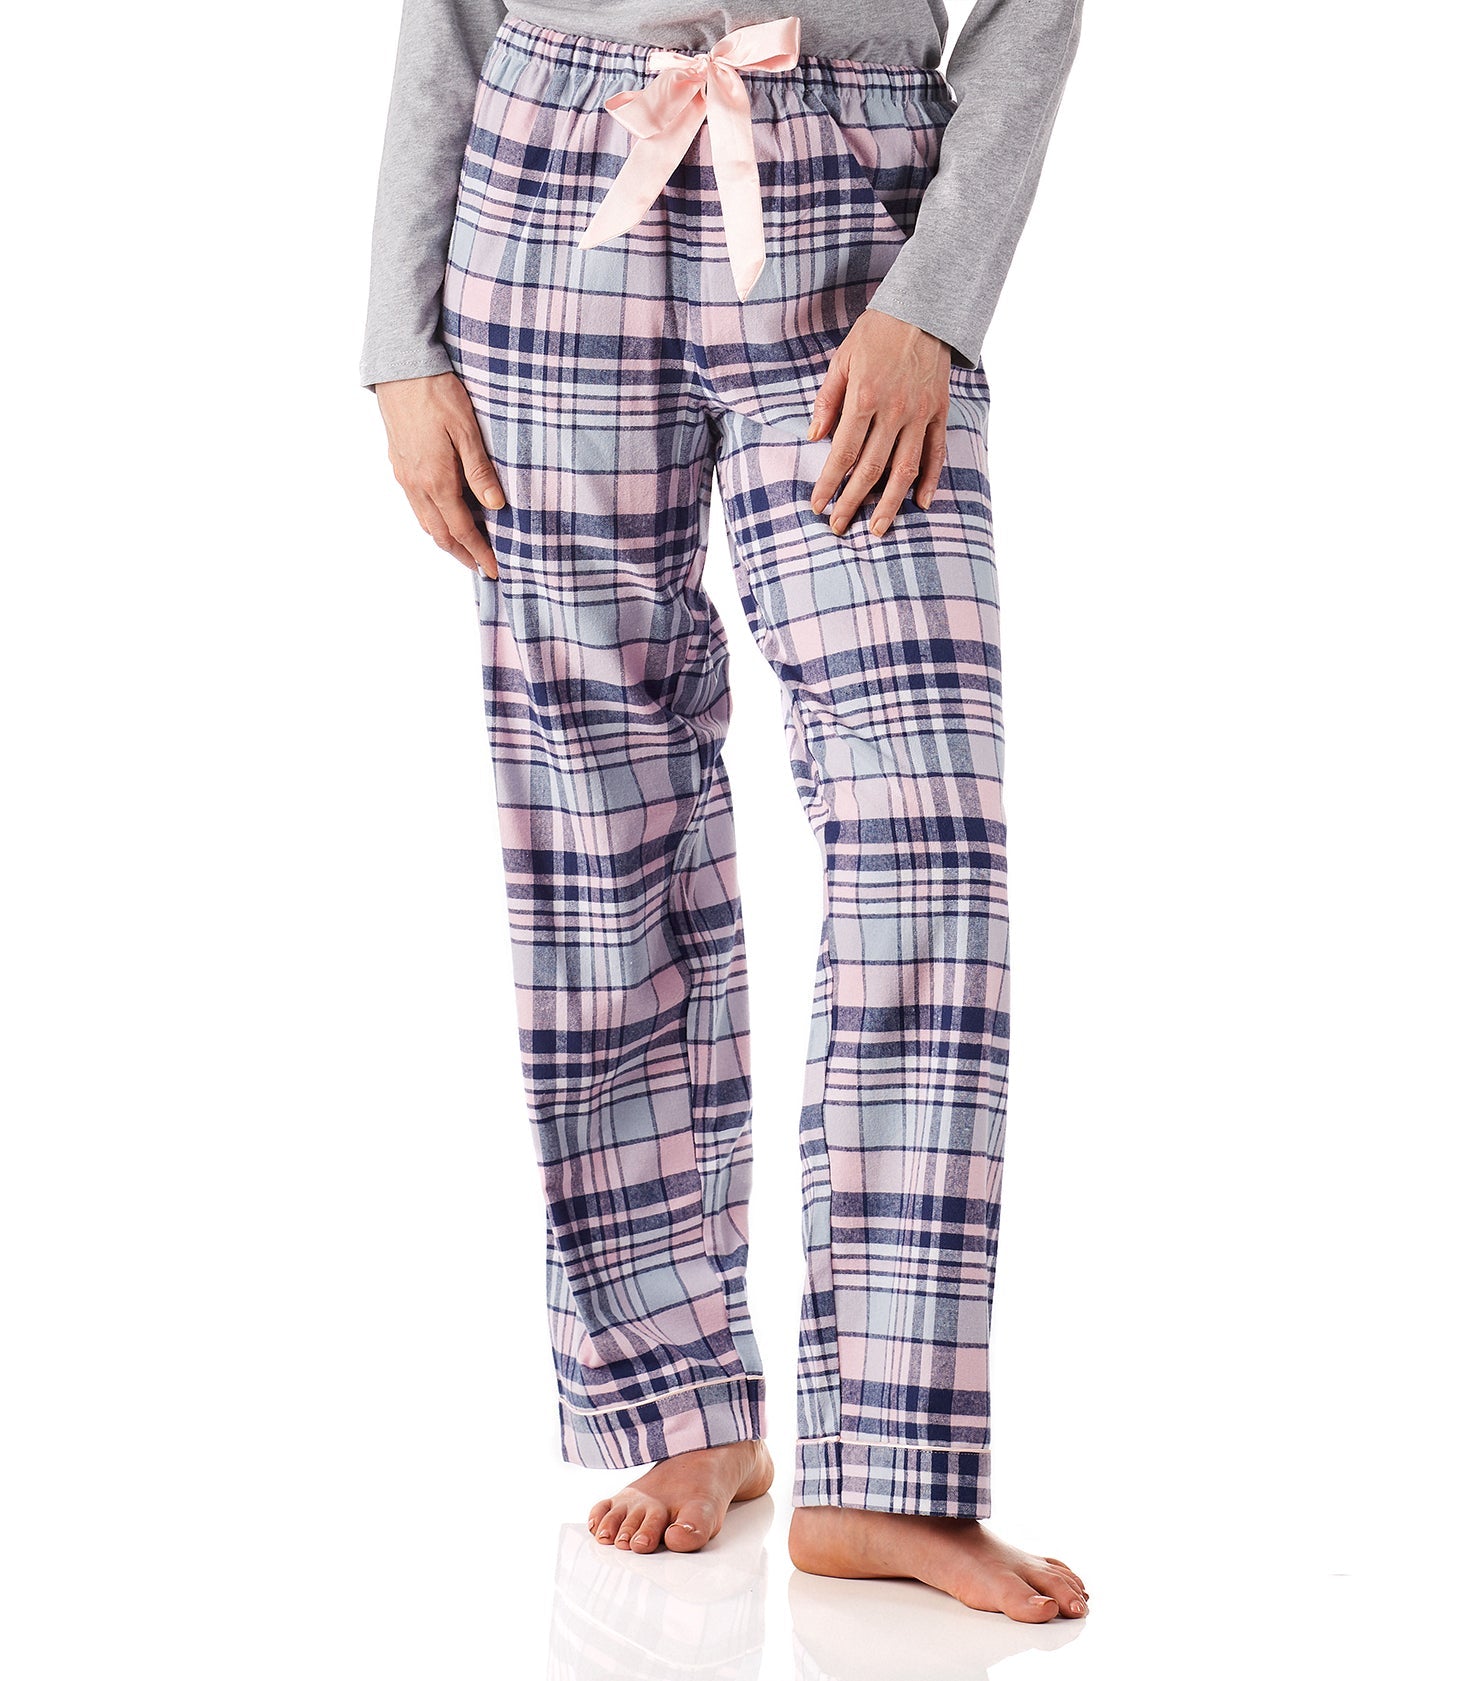 Women’s winter pyjama pants Australia | Isabella Check Flannelette Cotton Pyjama Pants | Magnolia Lounge Australia